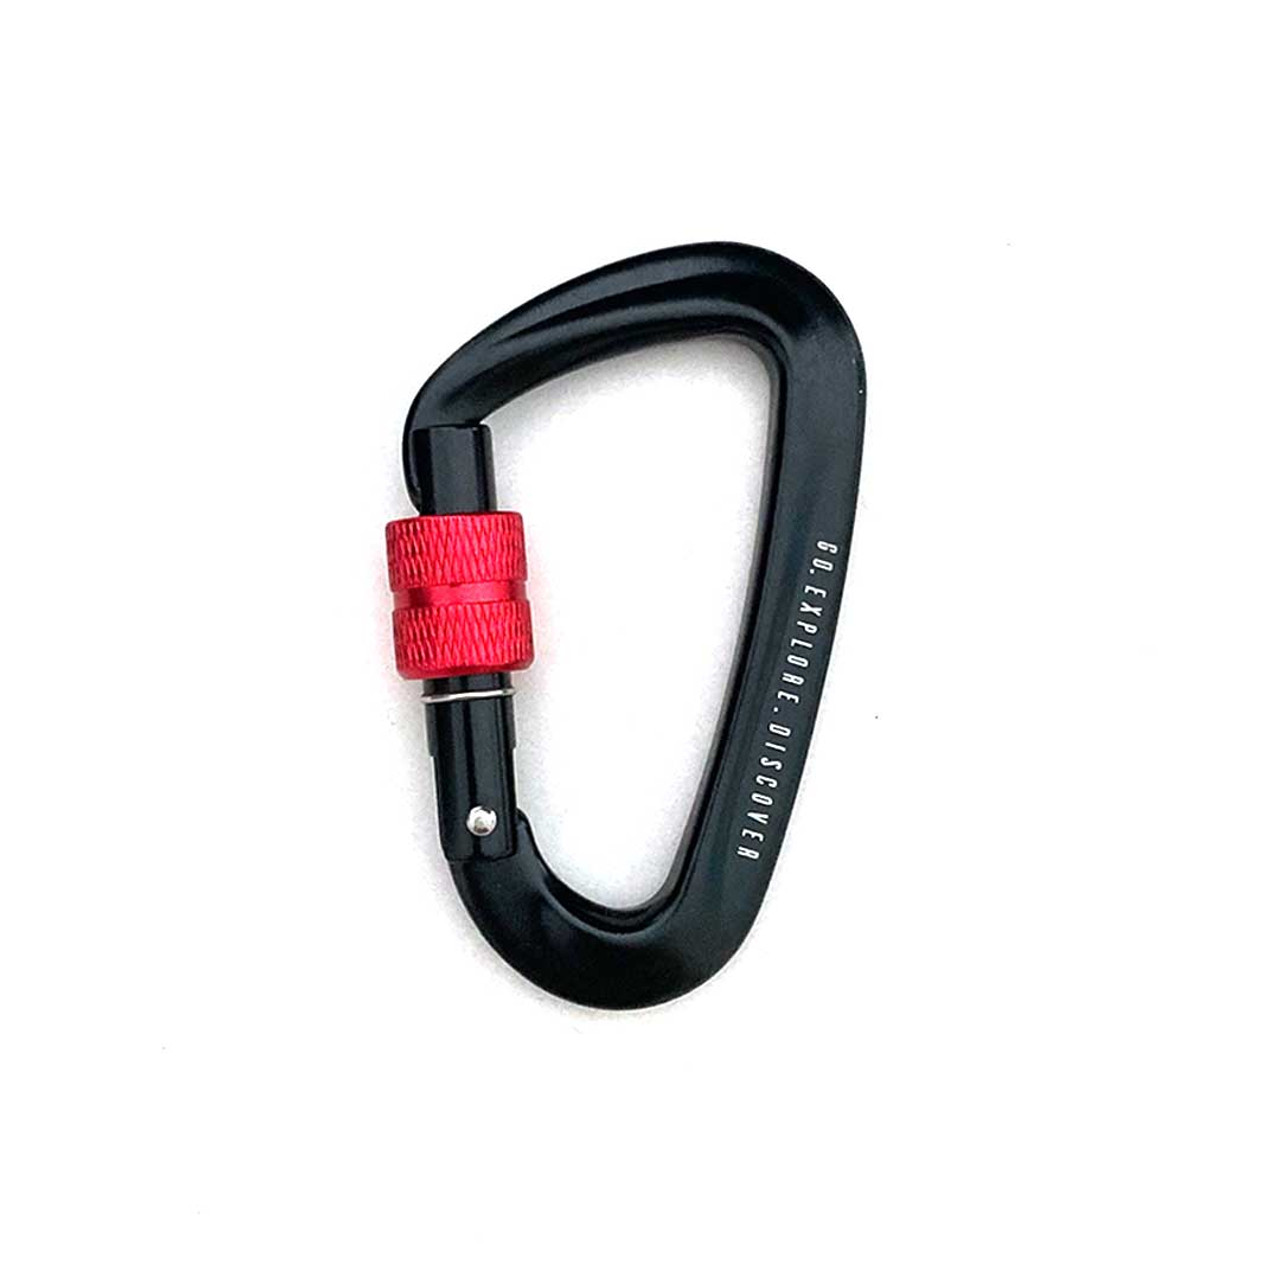 black carabiner clips  Small aluminum black carabiner clips for dog leash